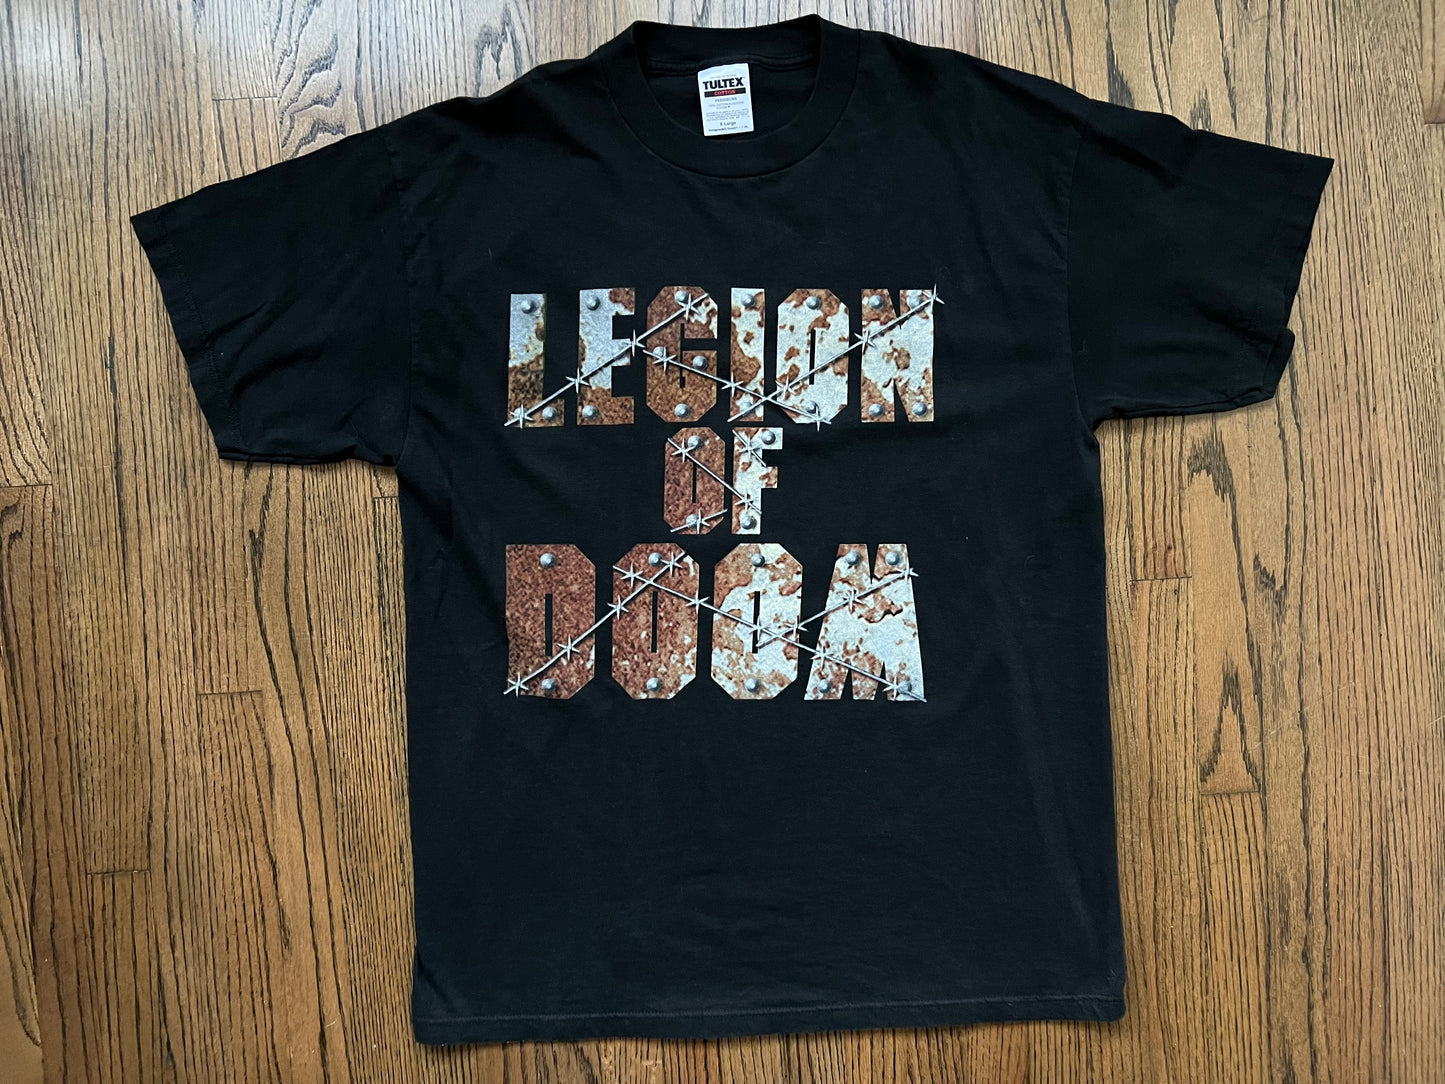 1998 WWF Legion of Doom two sided shirt